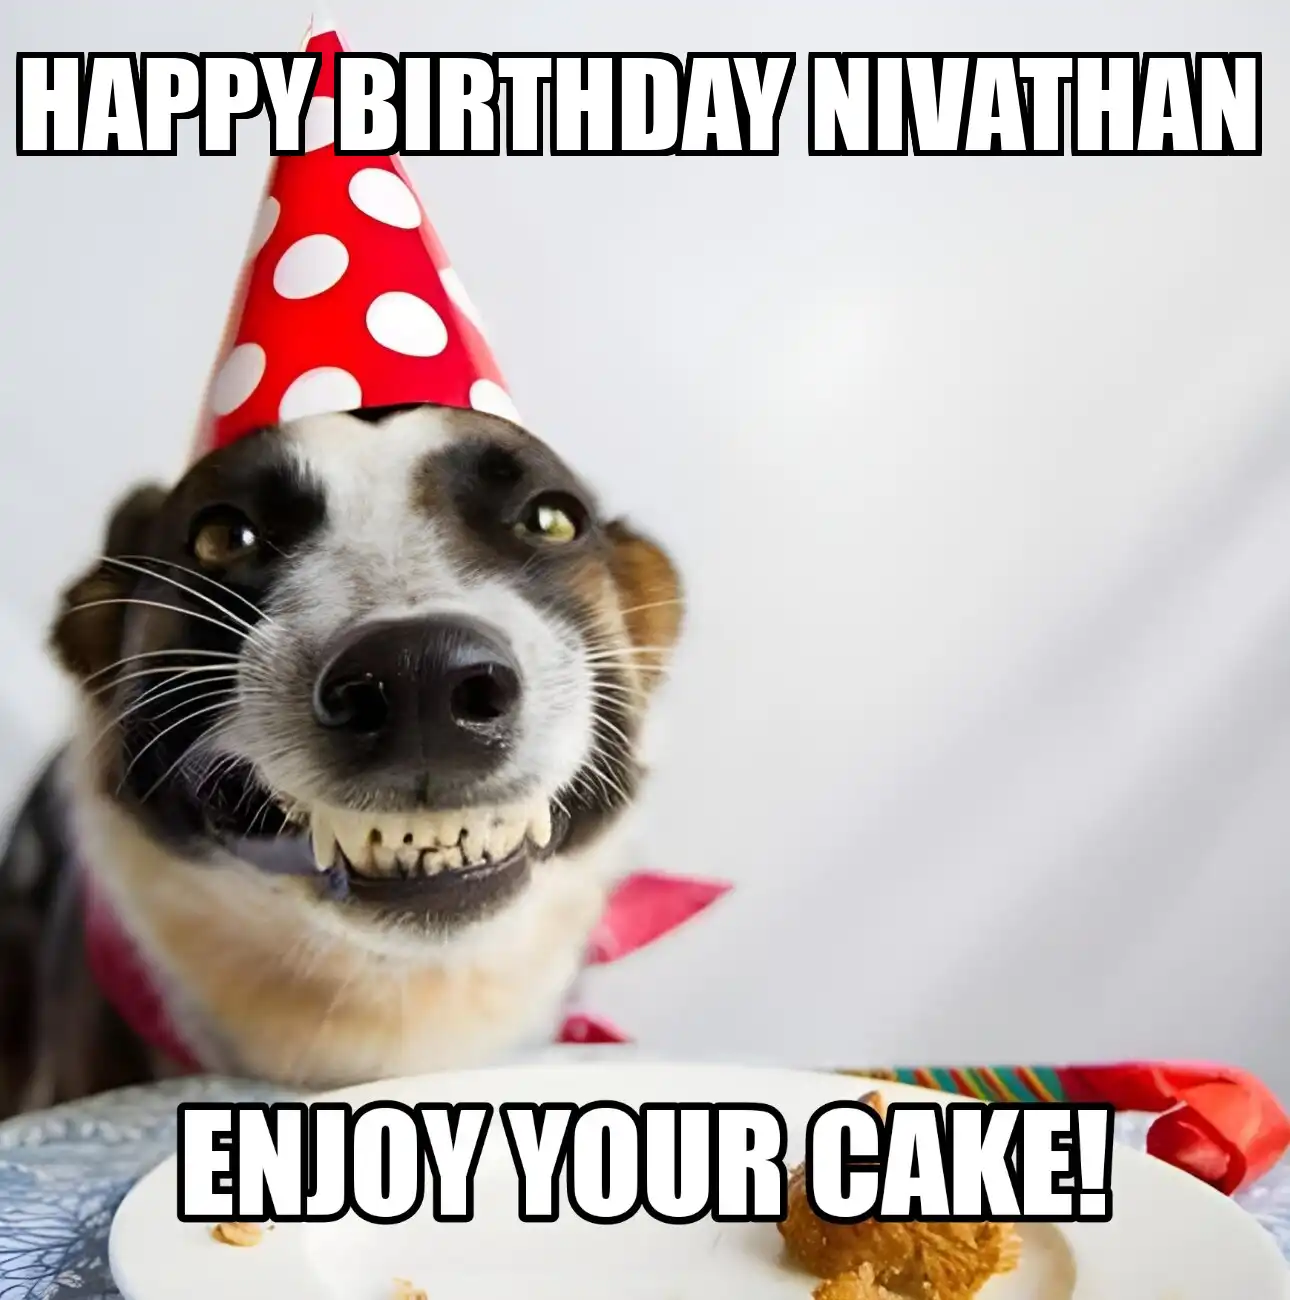 Happy Birthday Nivathan Enjoy Your Cake Dog Meme